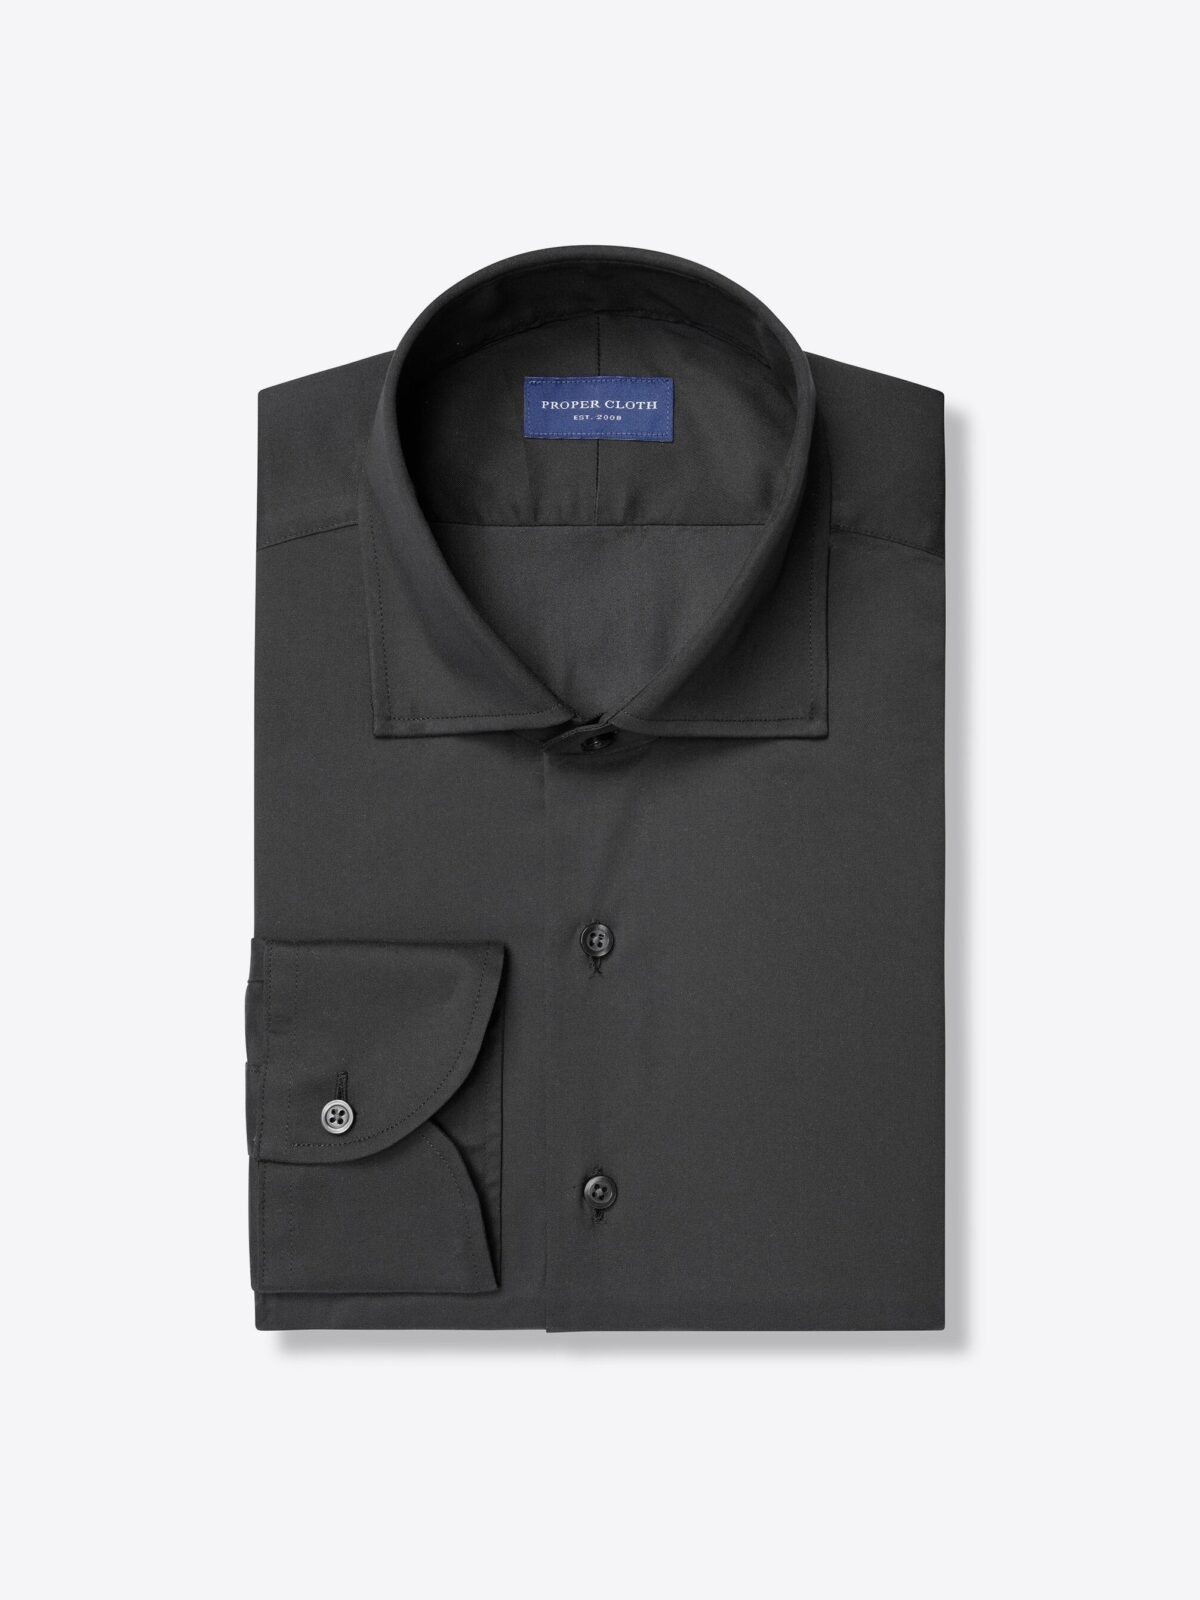 Thomas Mason Black 100s Stretch Twill Shirt by Proper Cloth